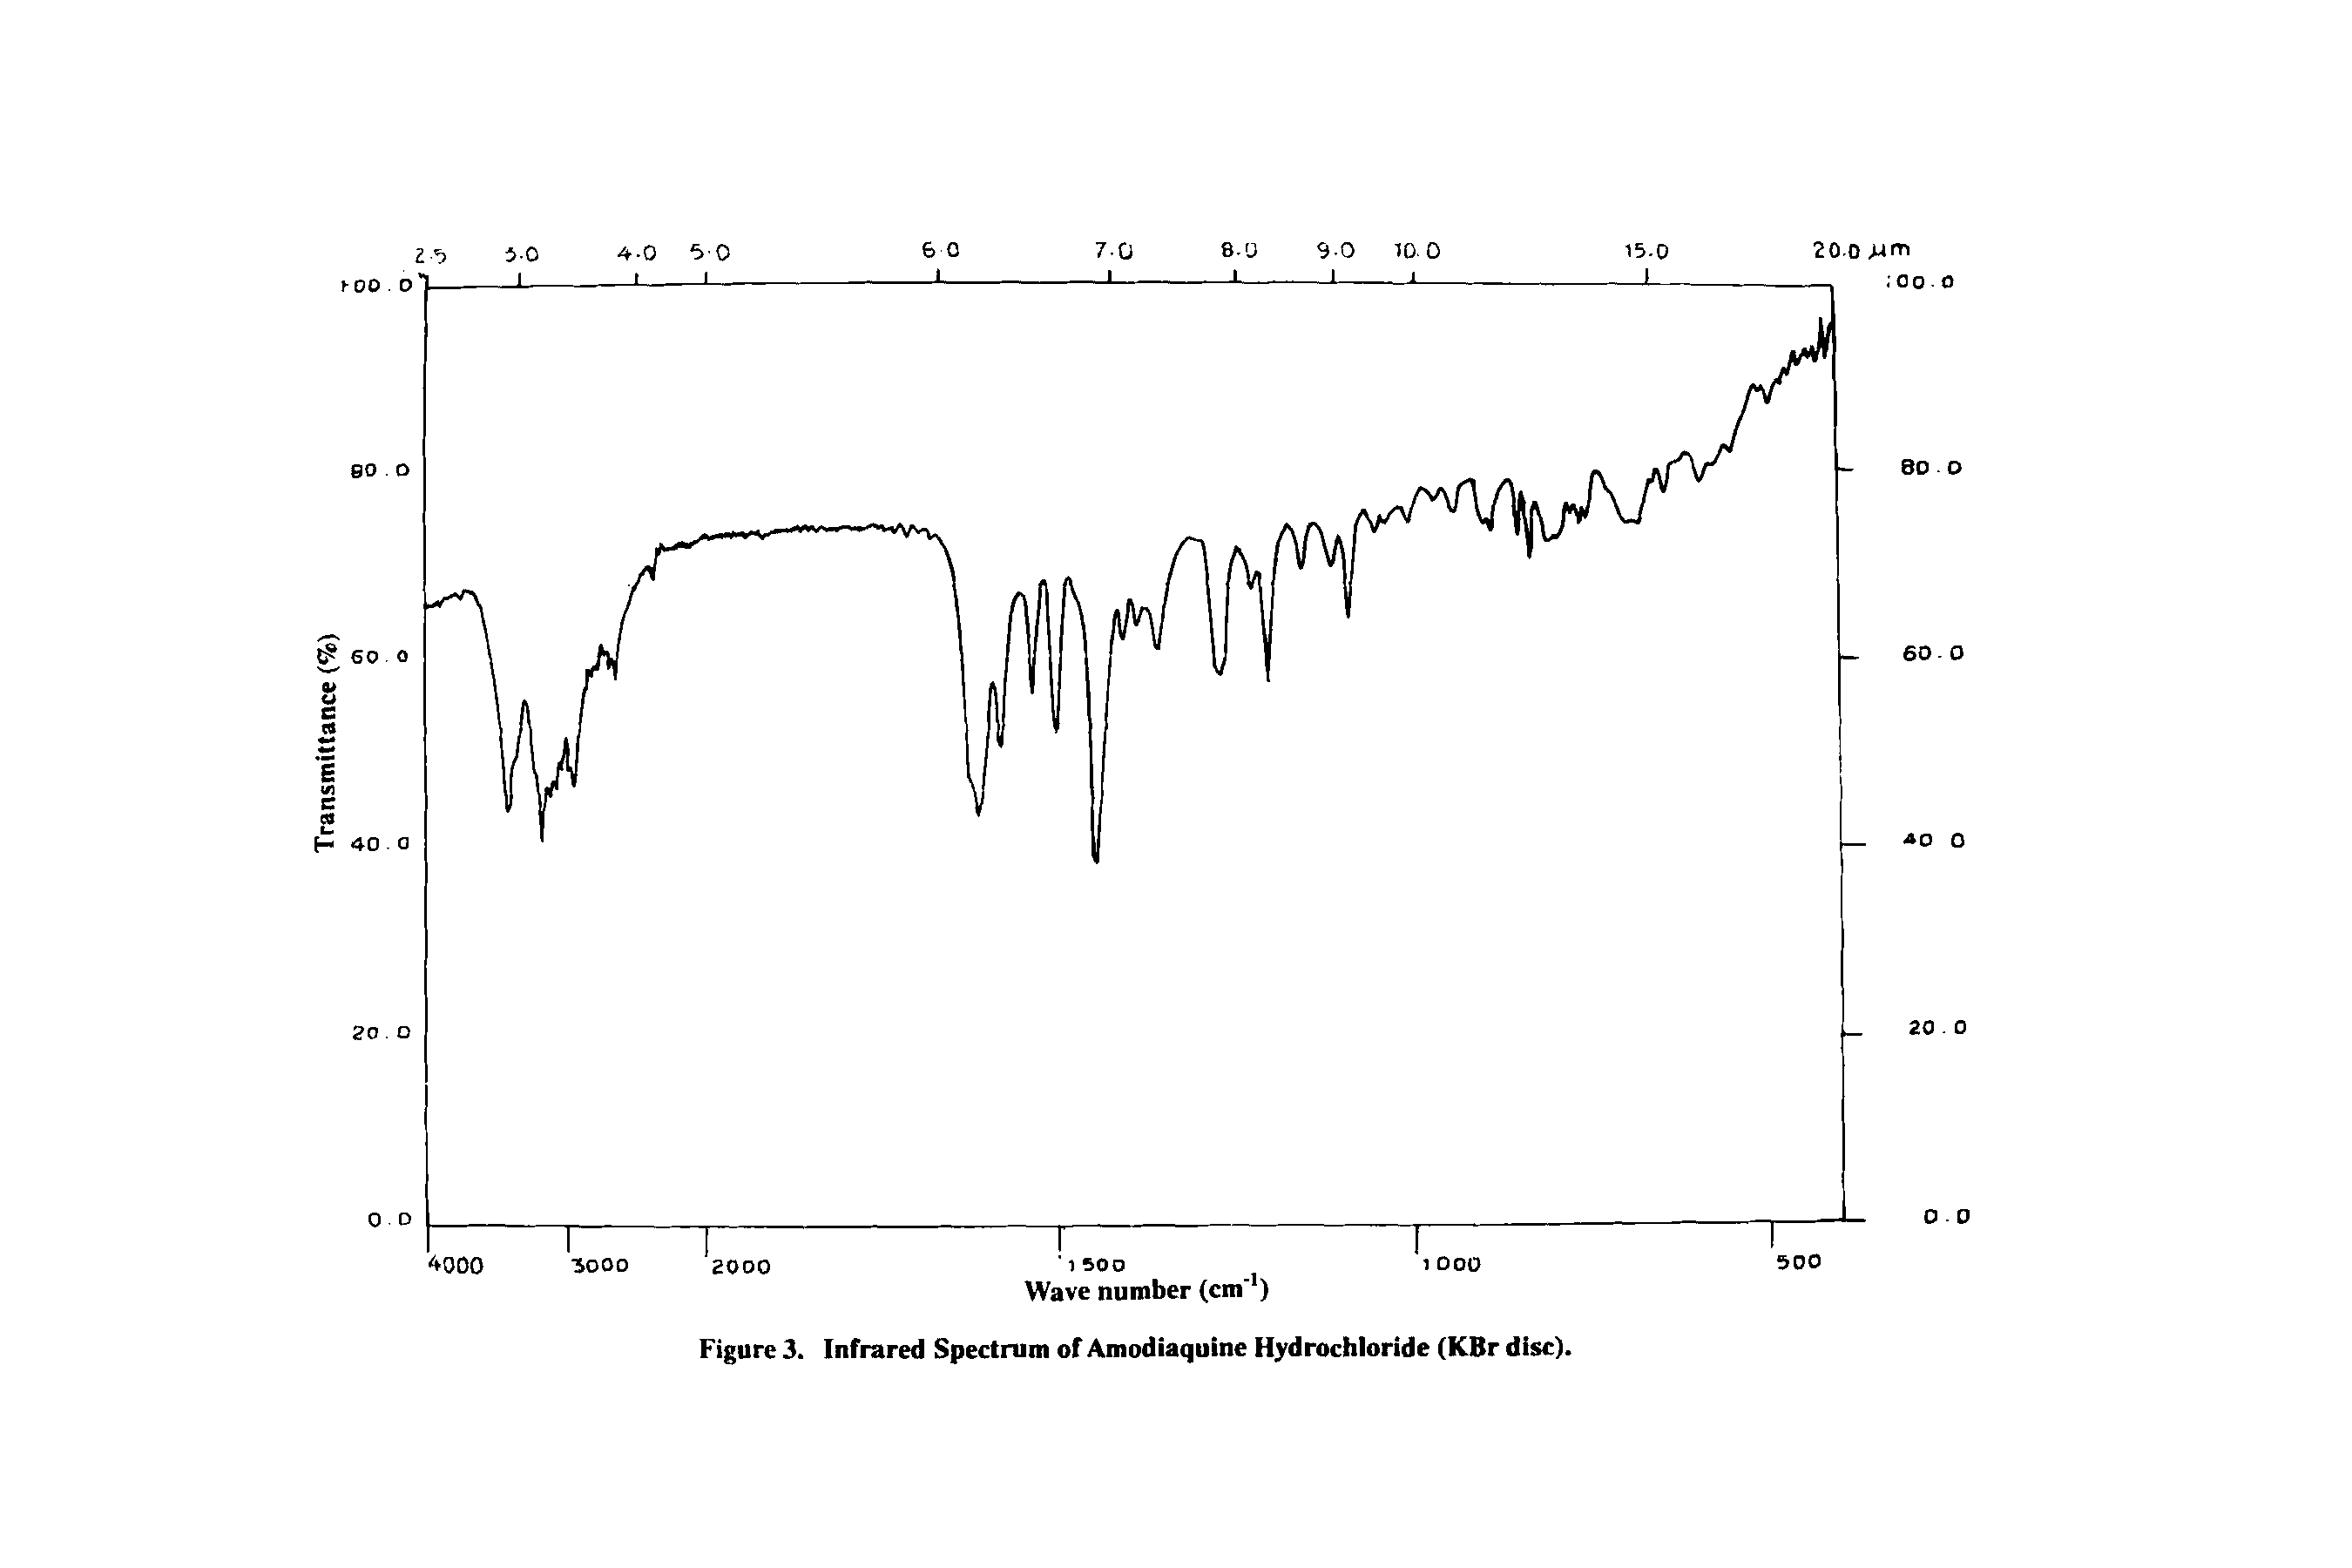 Figure 3. Infrared Spectrum of Amodiaquine Hydrochloride (KBr disc).